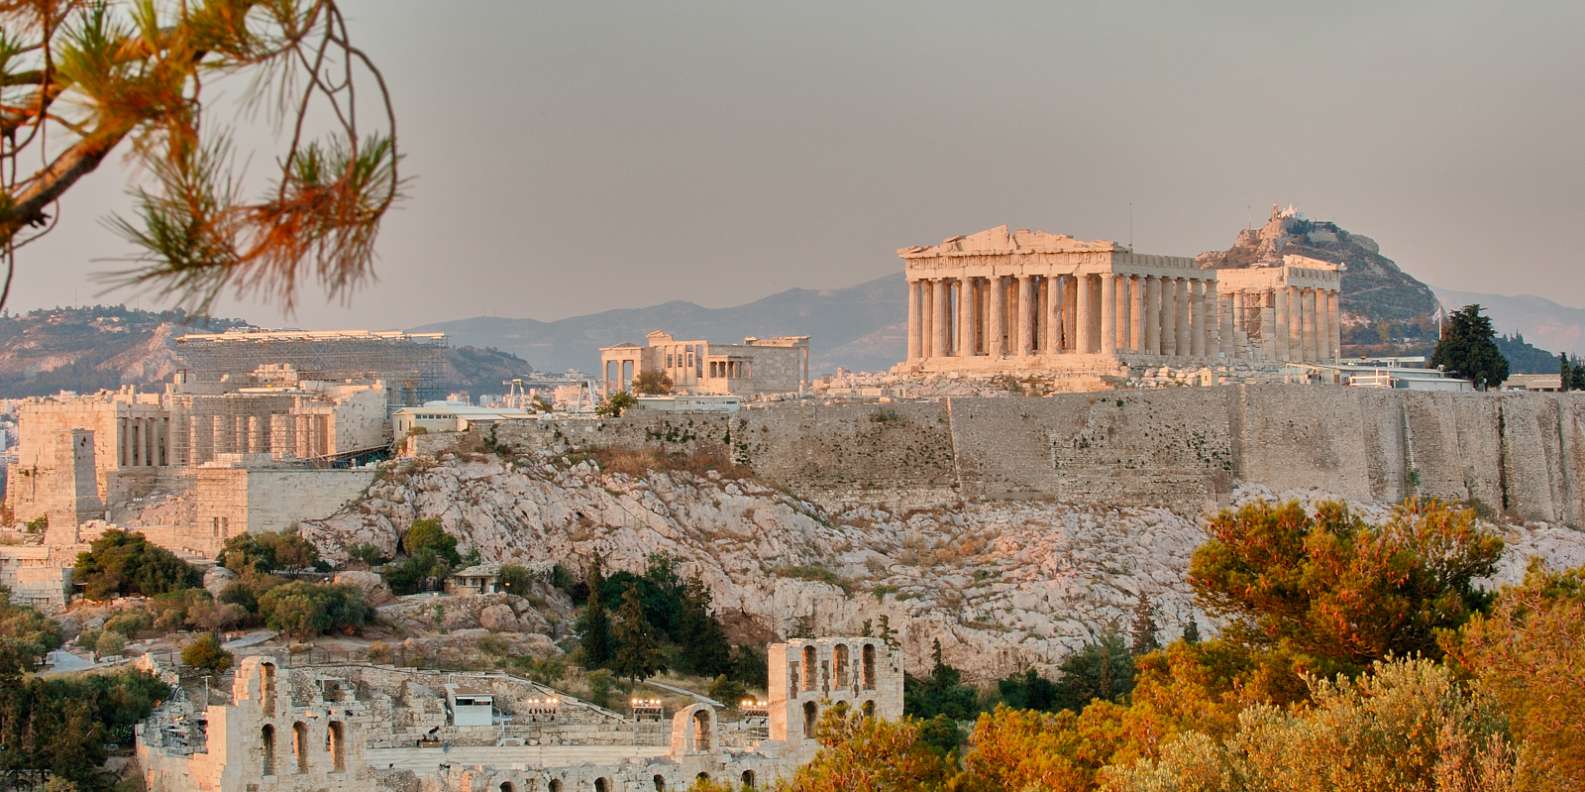 Acropolis of Athens, Athens - Book Tickets & Tours